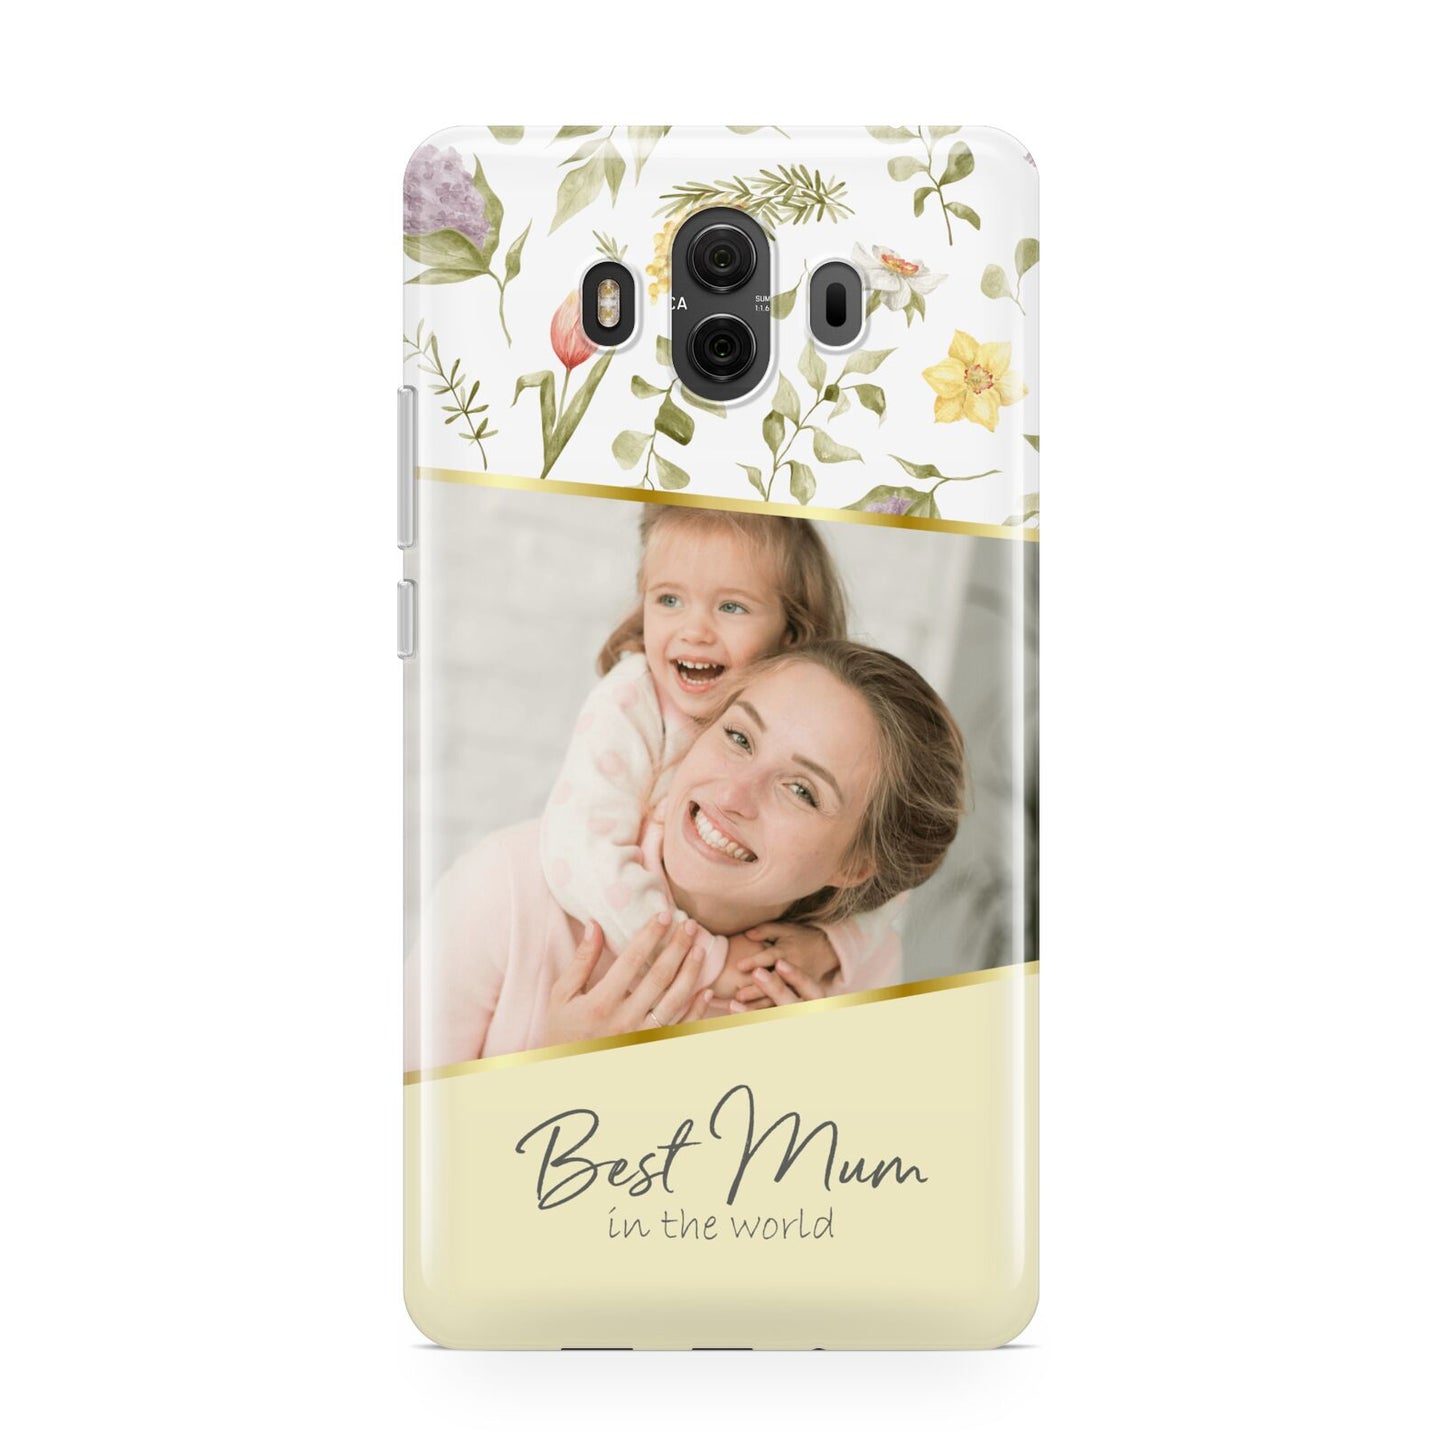 Personalised Best Mum Huawei Mate 10 Protective Phone Case